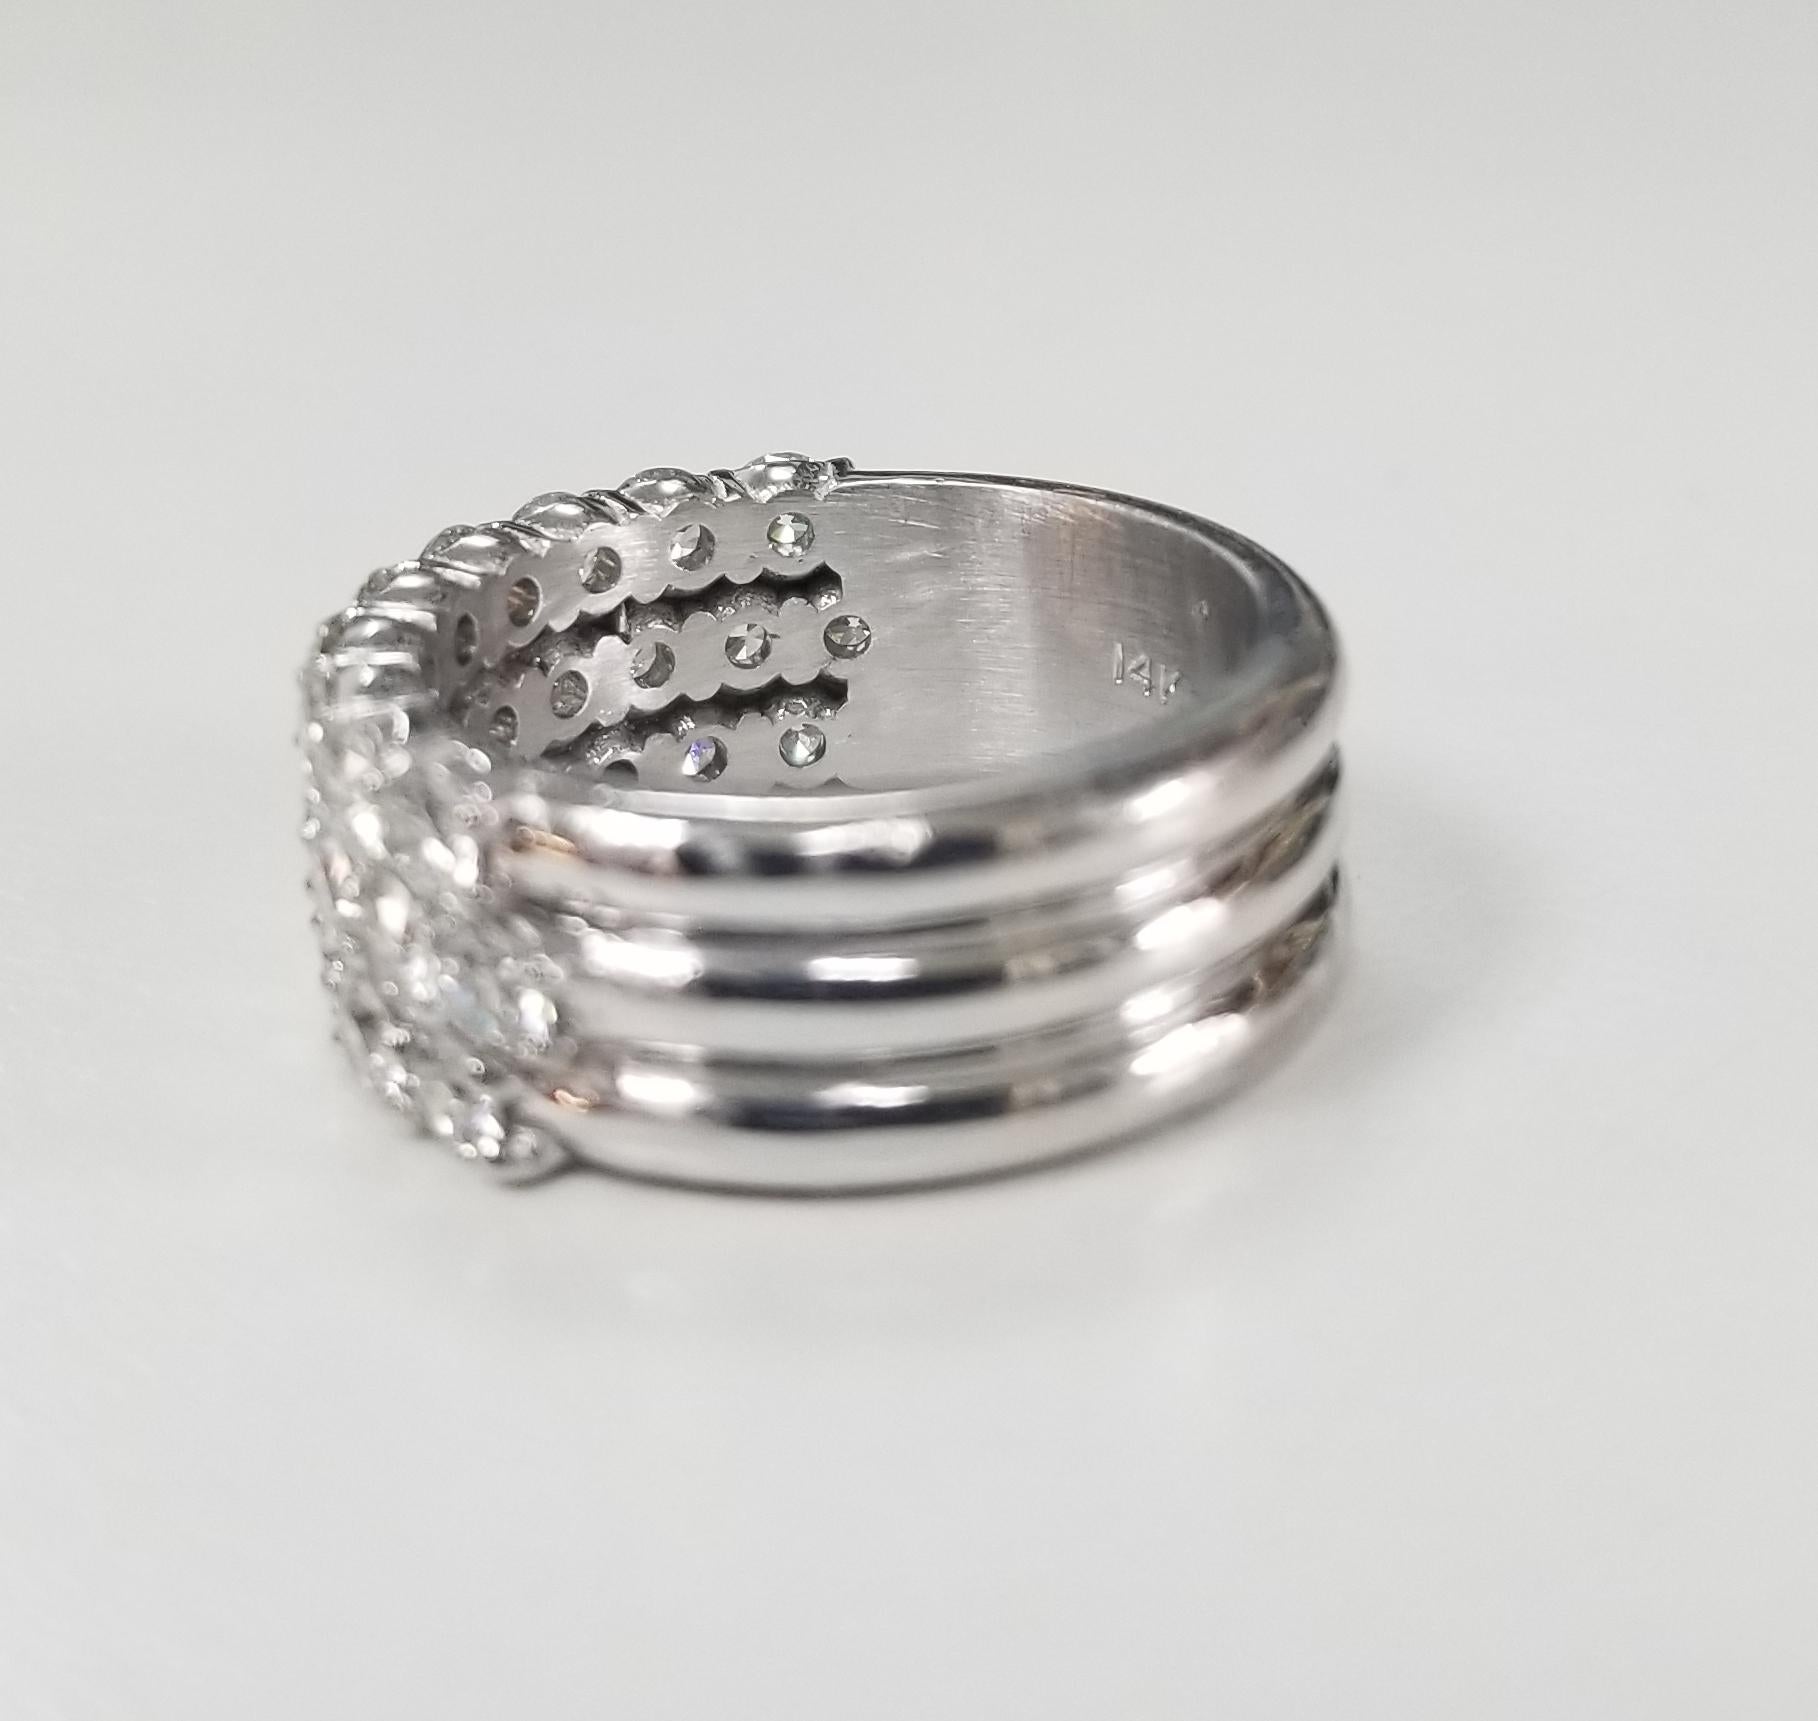 Contemporary 14 Karat White Gold 3-Row Shared Prong Wedding Ring